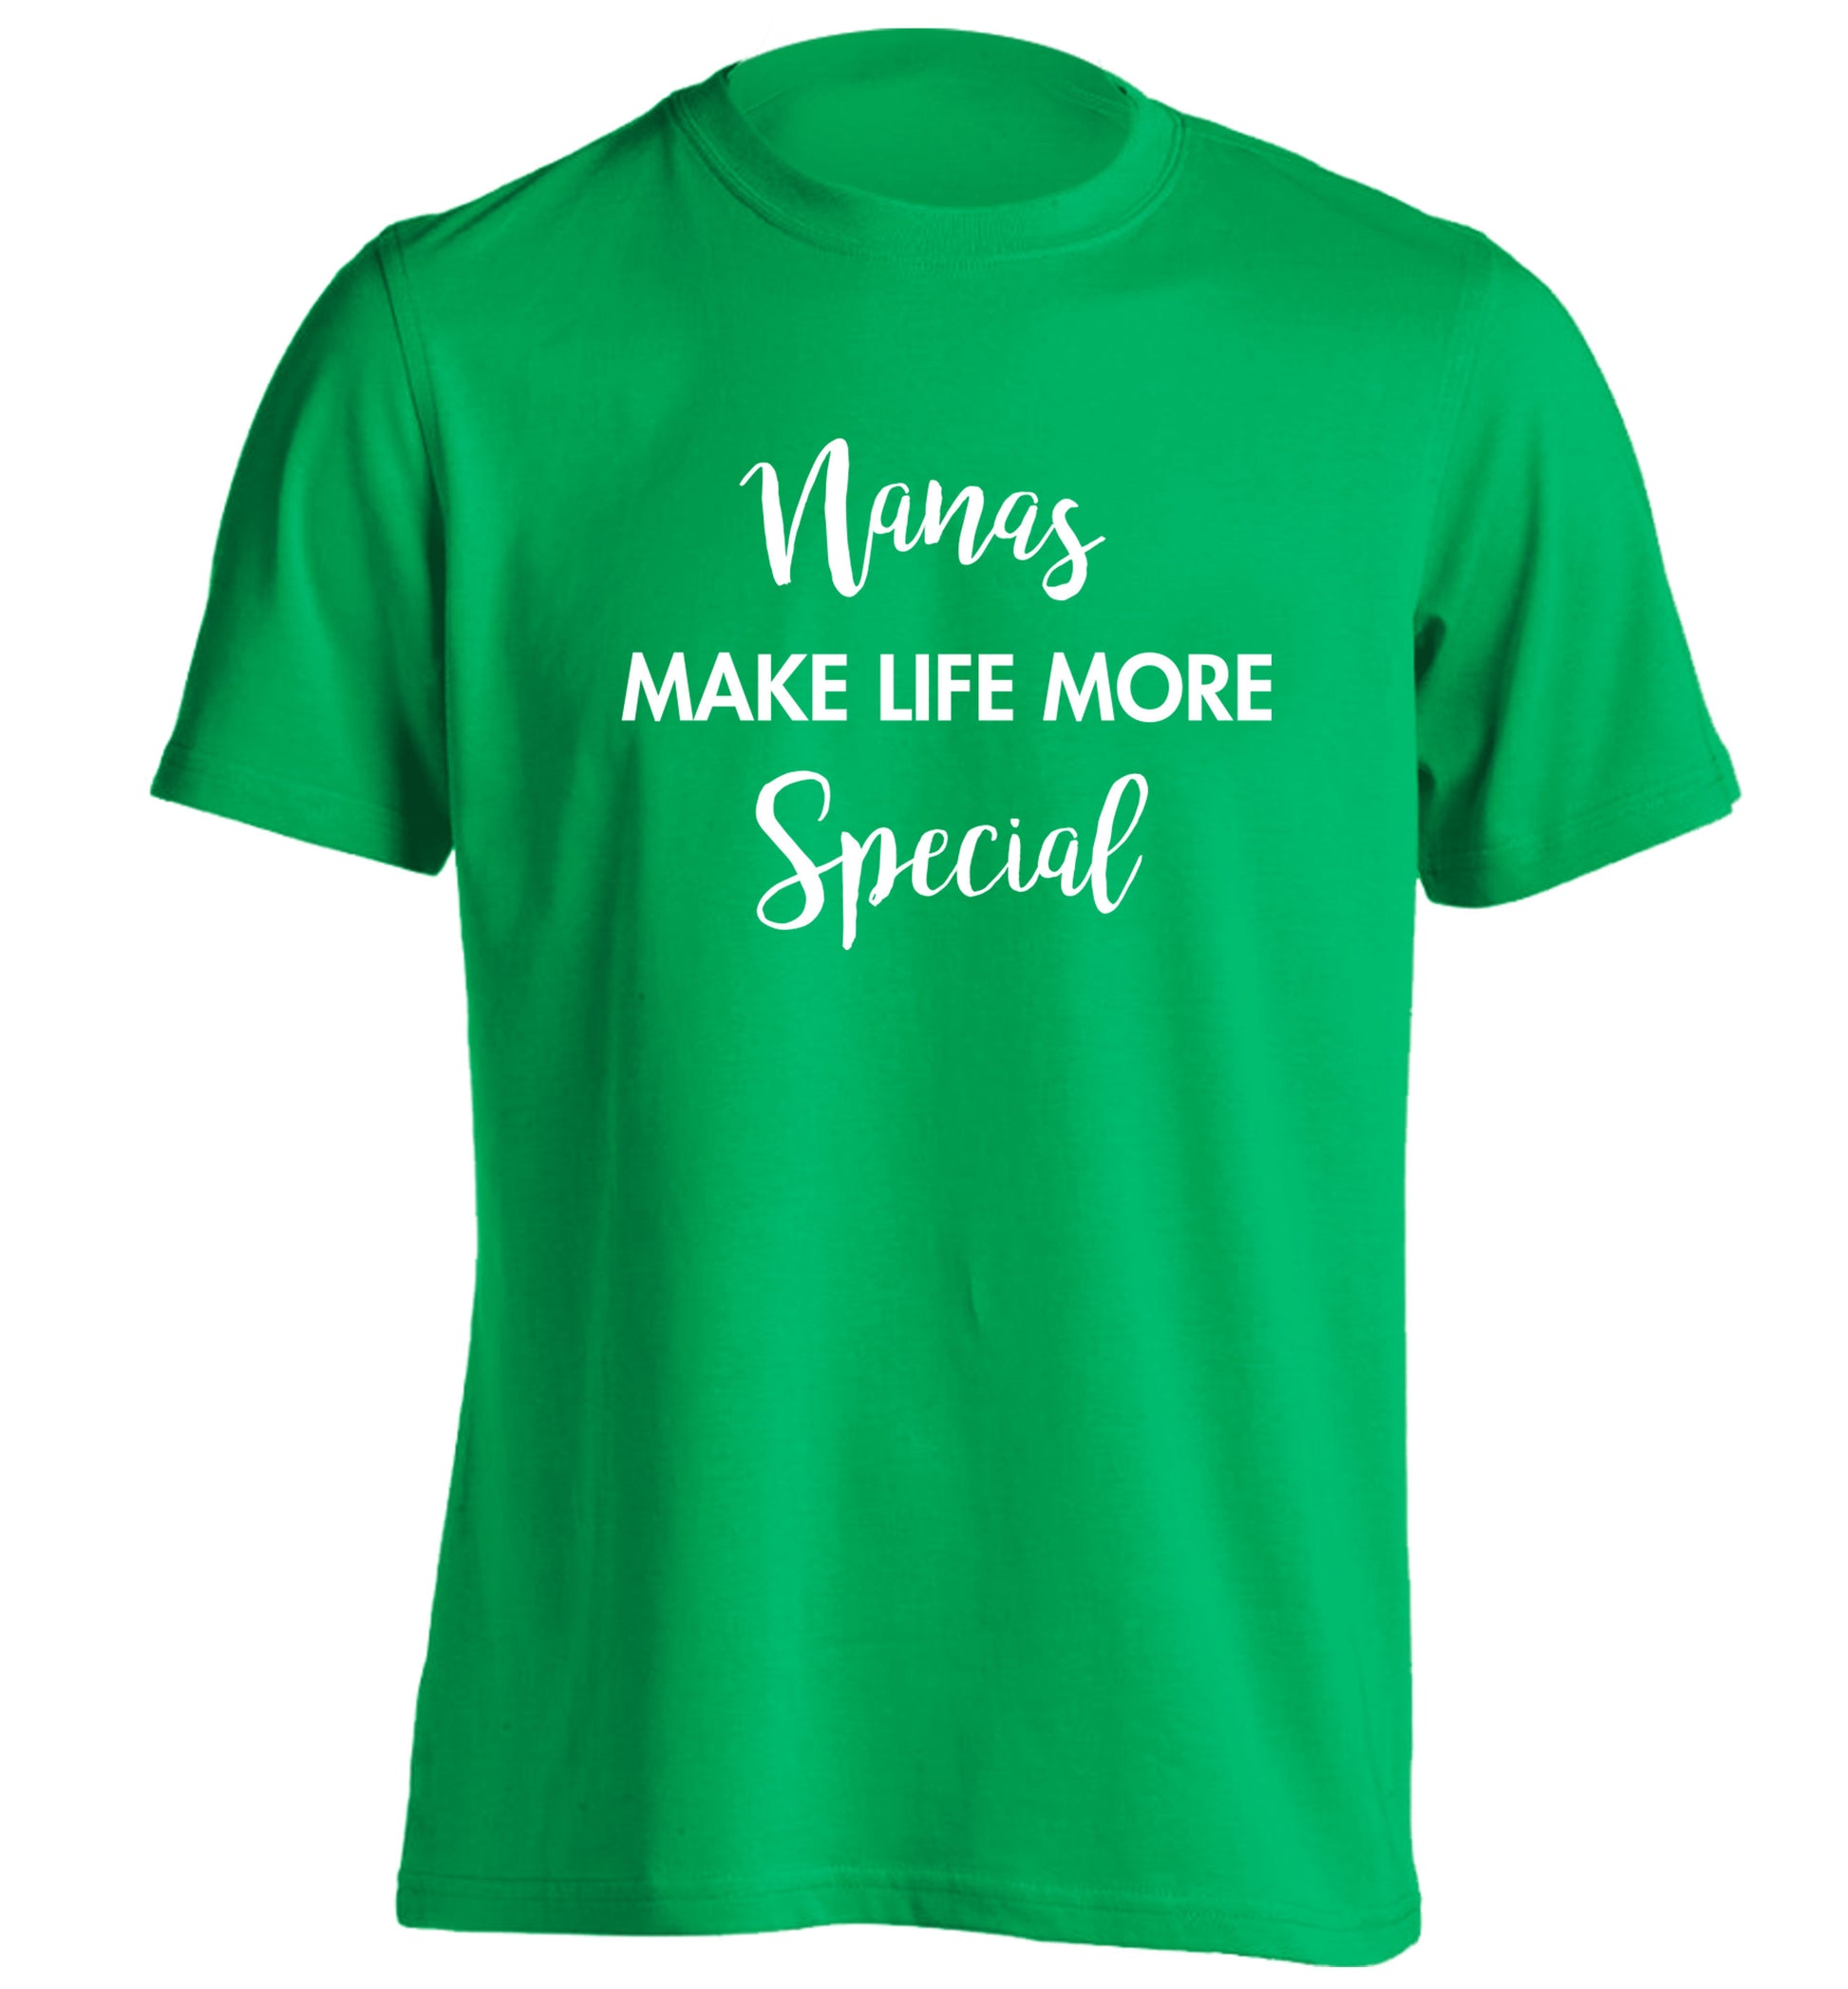 Nanas make life more special adults unisex green Tshirt 2XL